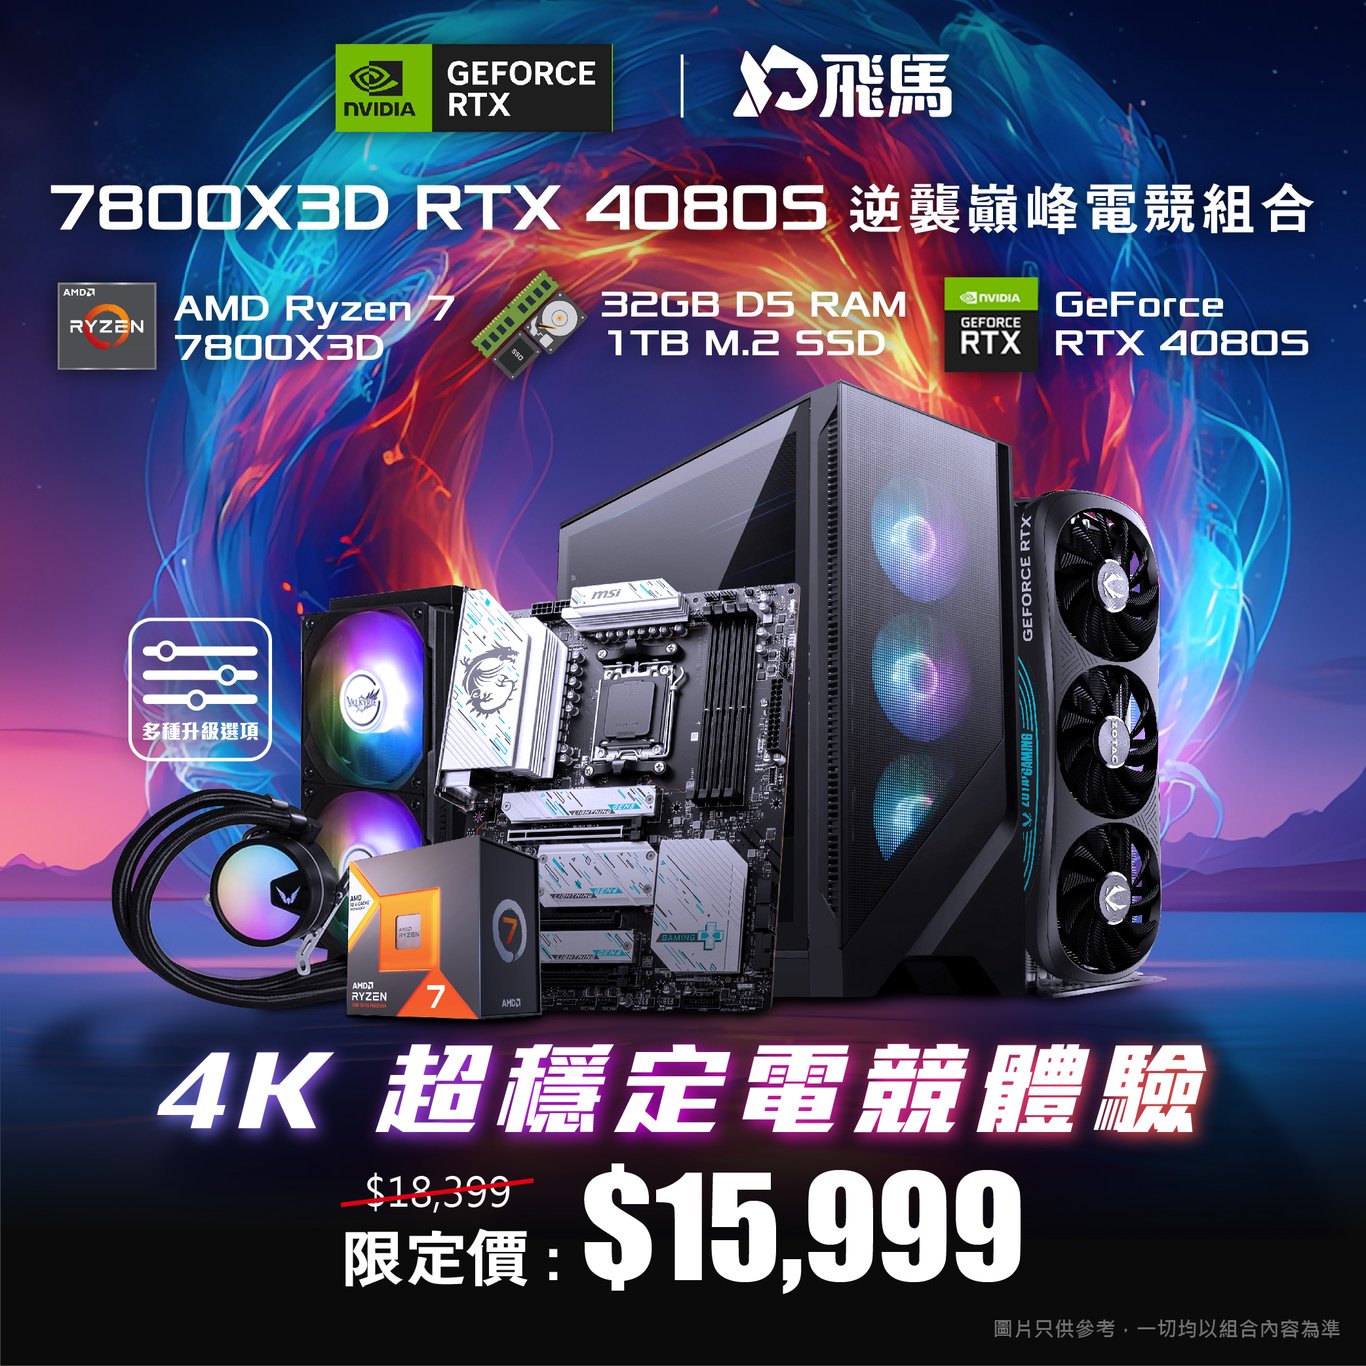 【4K 超穩定】7800X3D RTX 4080S 逆襲巔峰電競組合